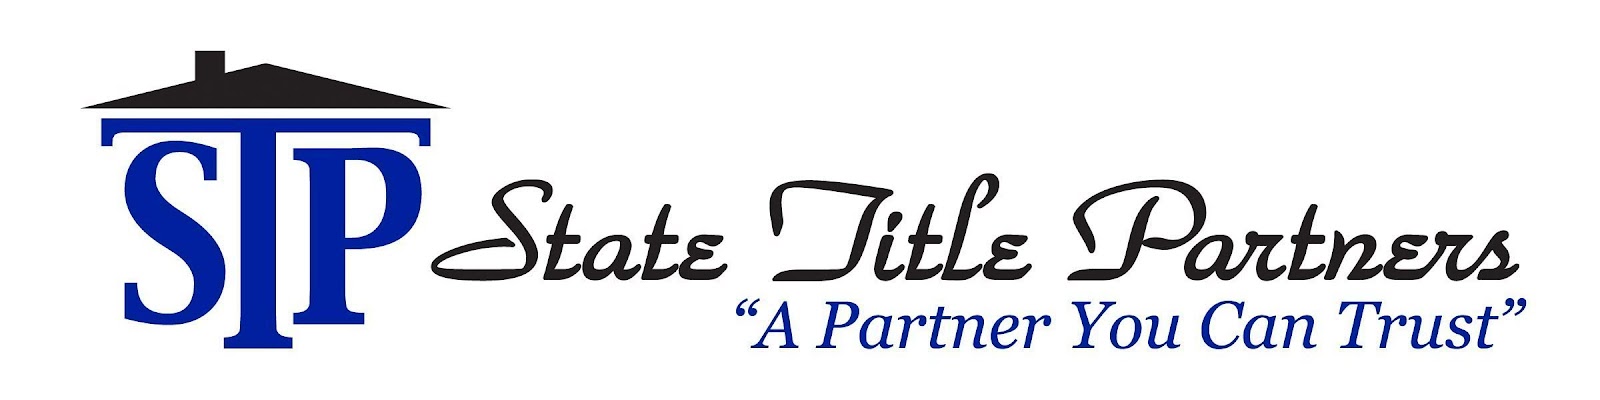 State Title Partners_Final_Logo_copy.jpg